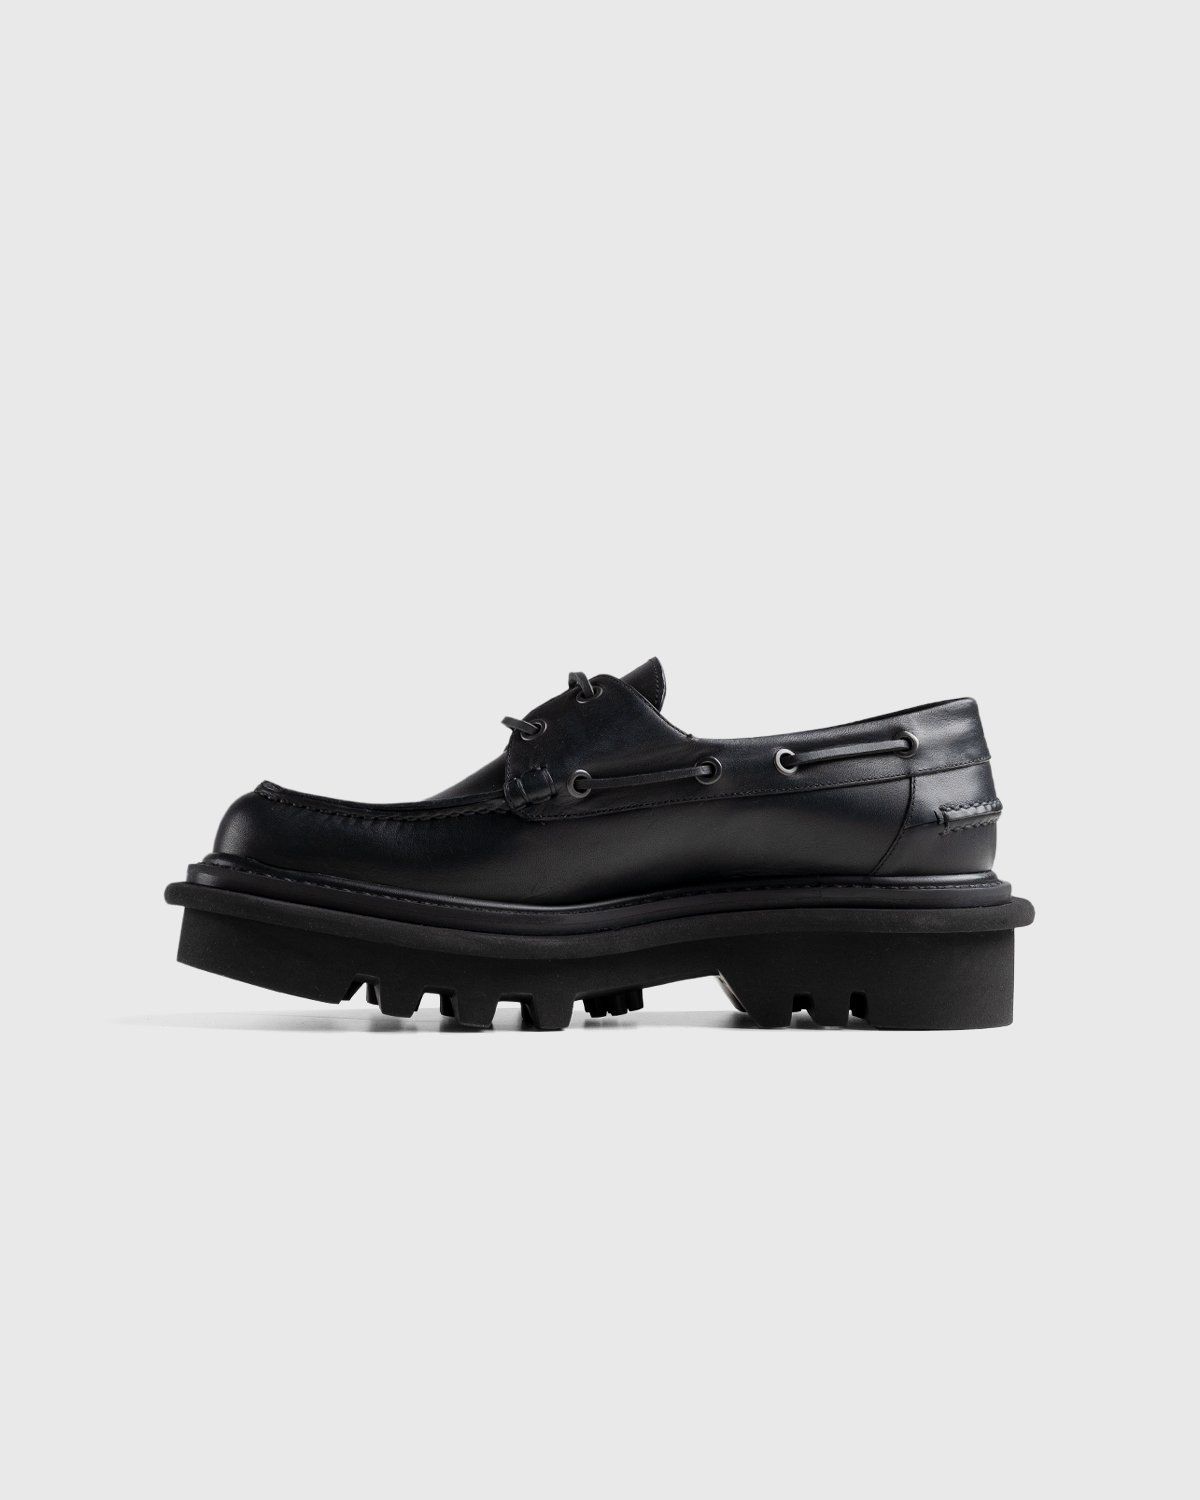 Dries van Noten – Leather Boat Shoe Black - Boat Shoes & Moccasins - Black - Image 2